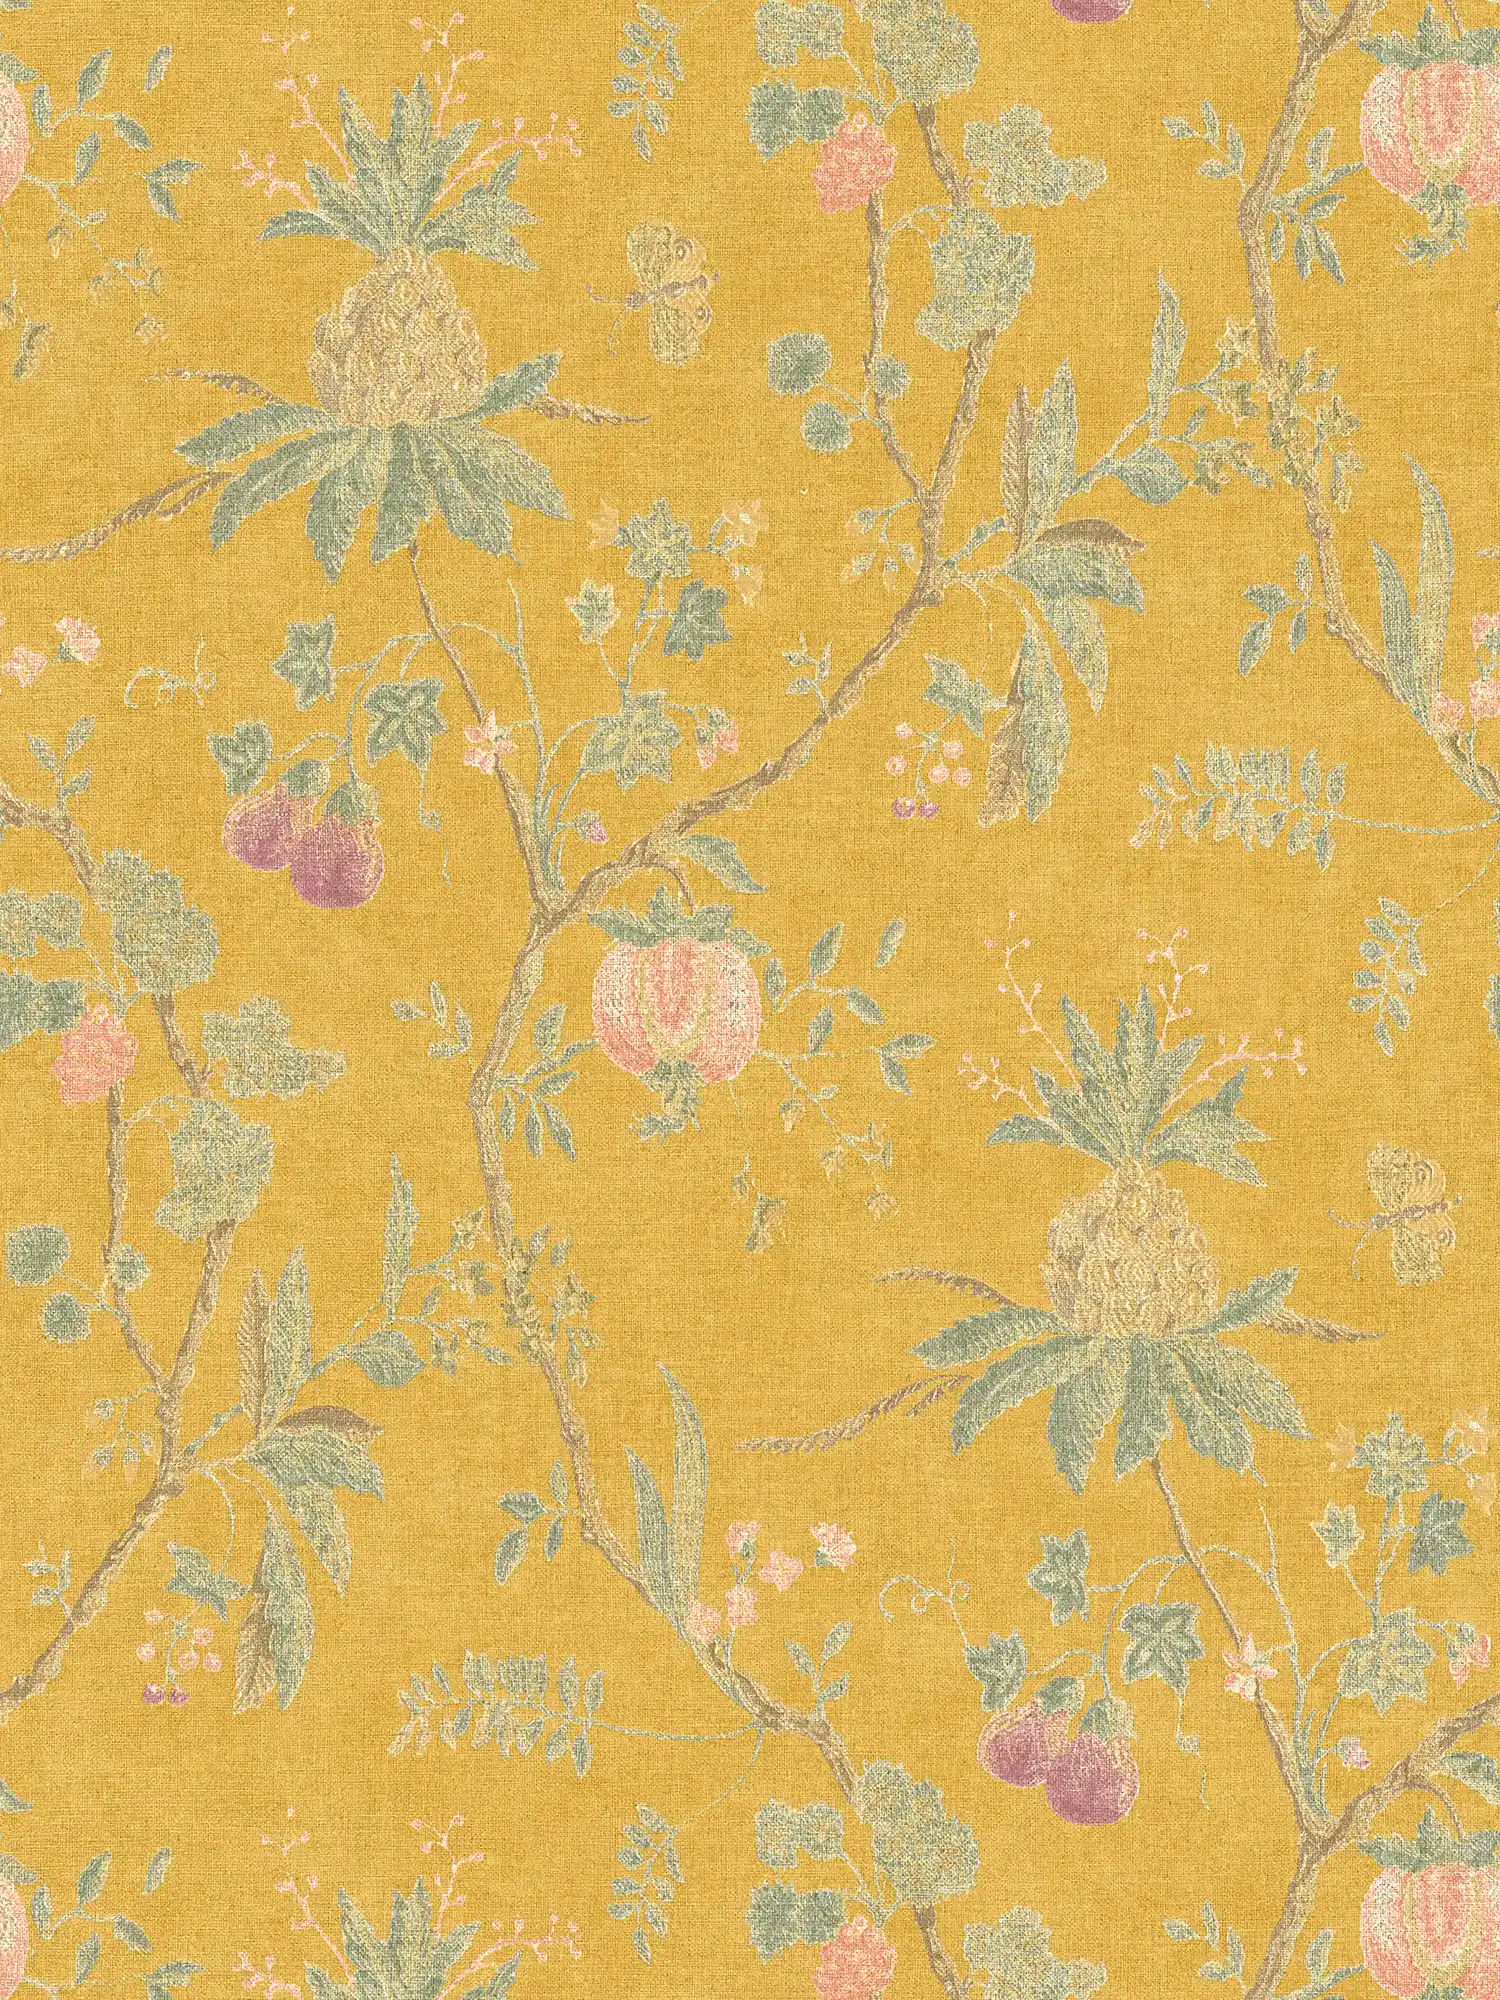         Vintage wallpaper floral pattern & linen look - yellow
    